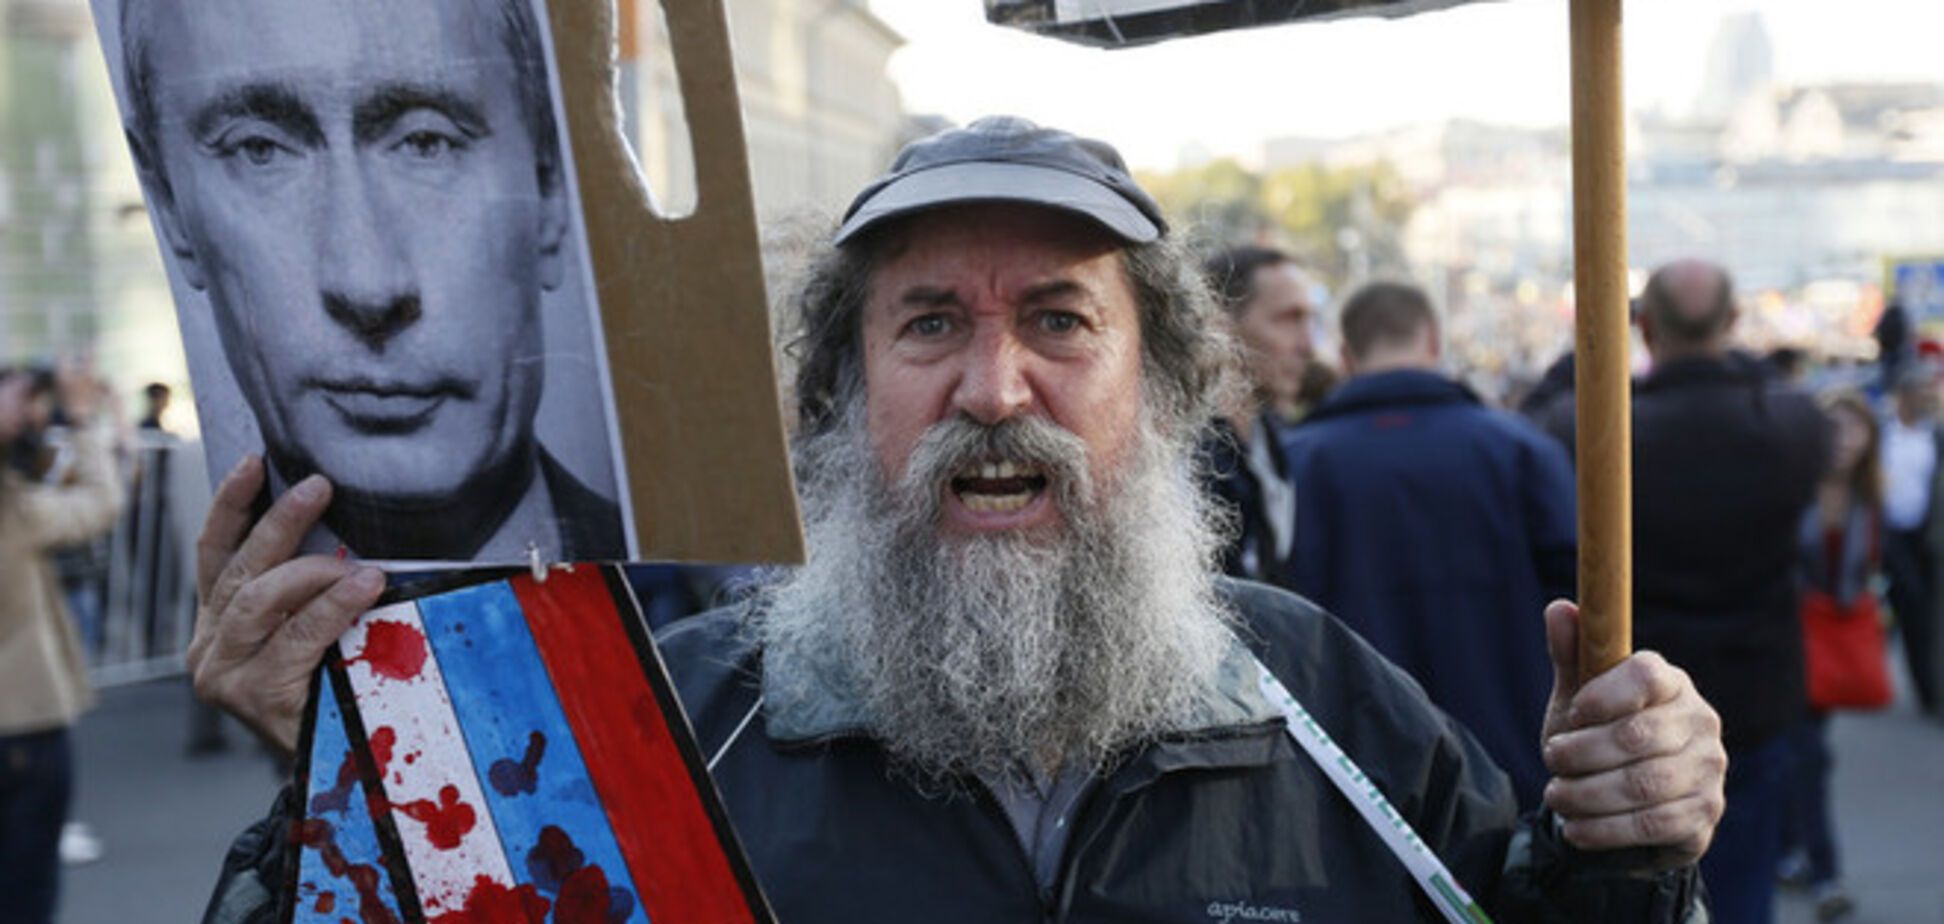 Режим воров поменяют не санкции, а прозревший русский народ - Немцов